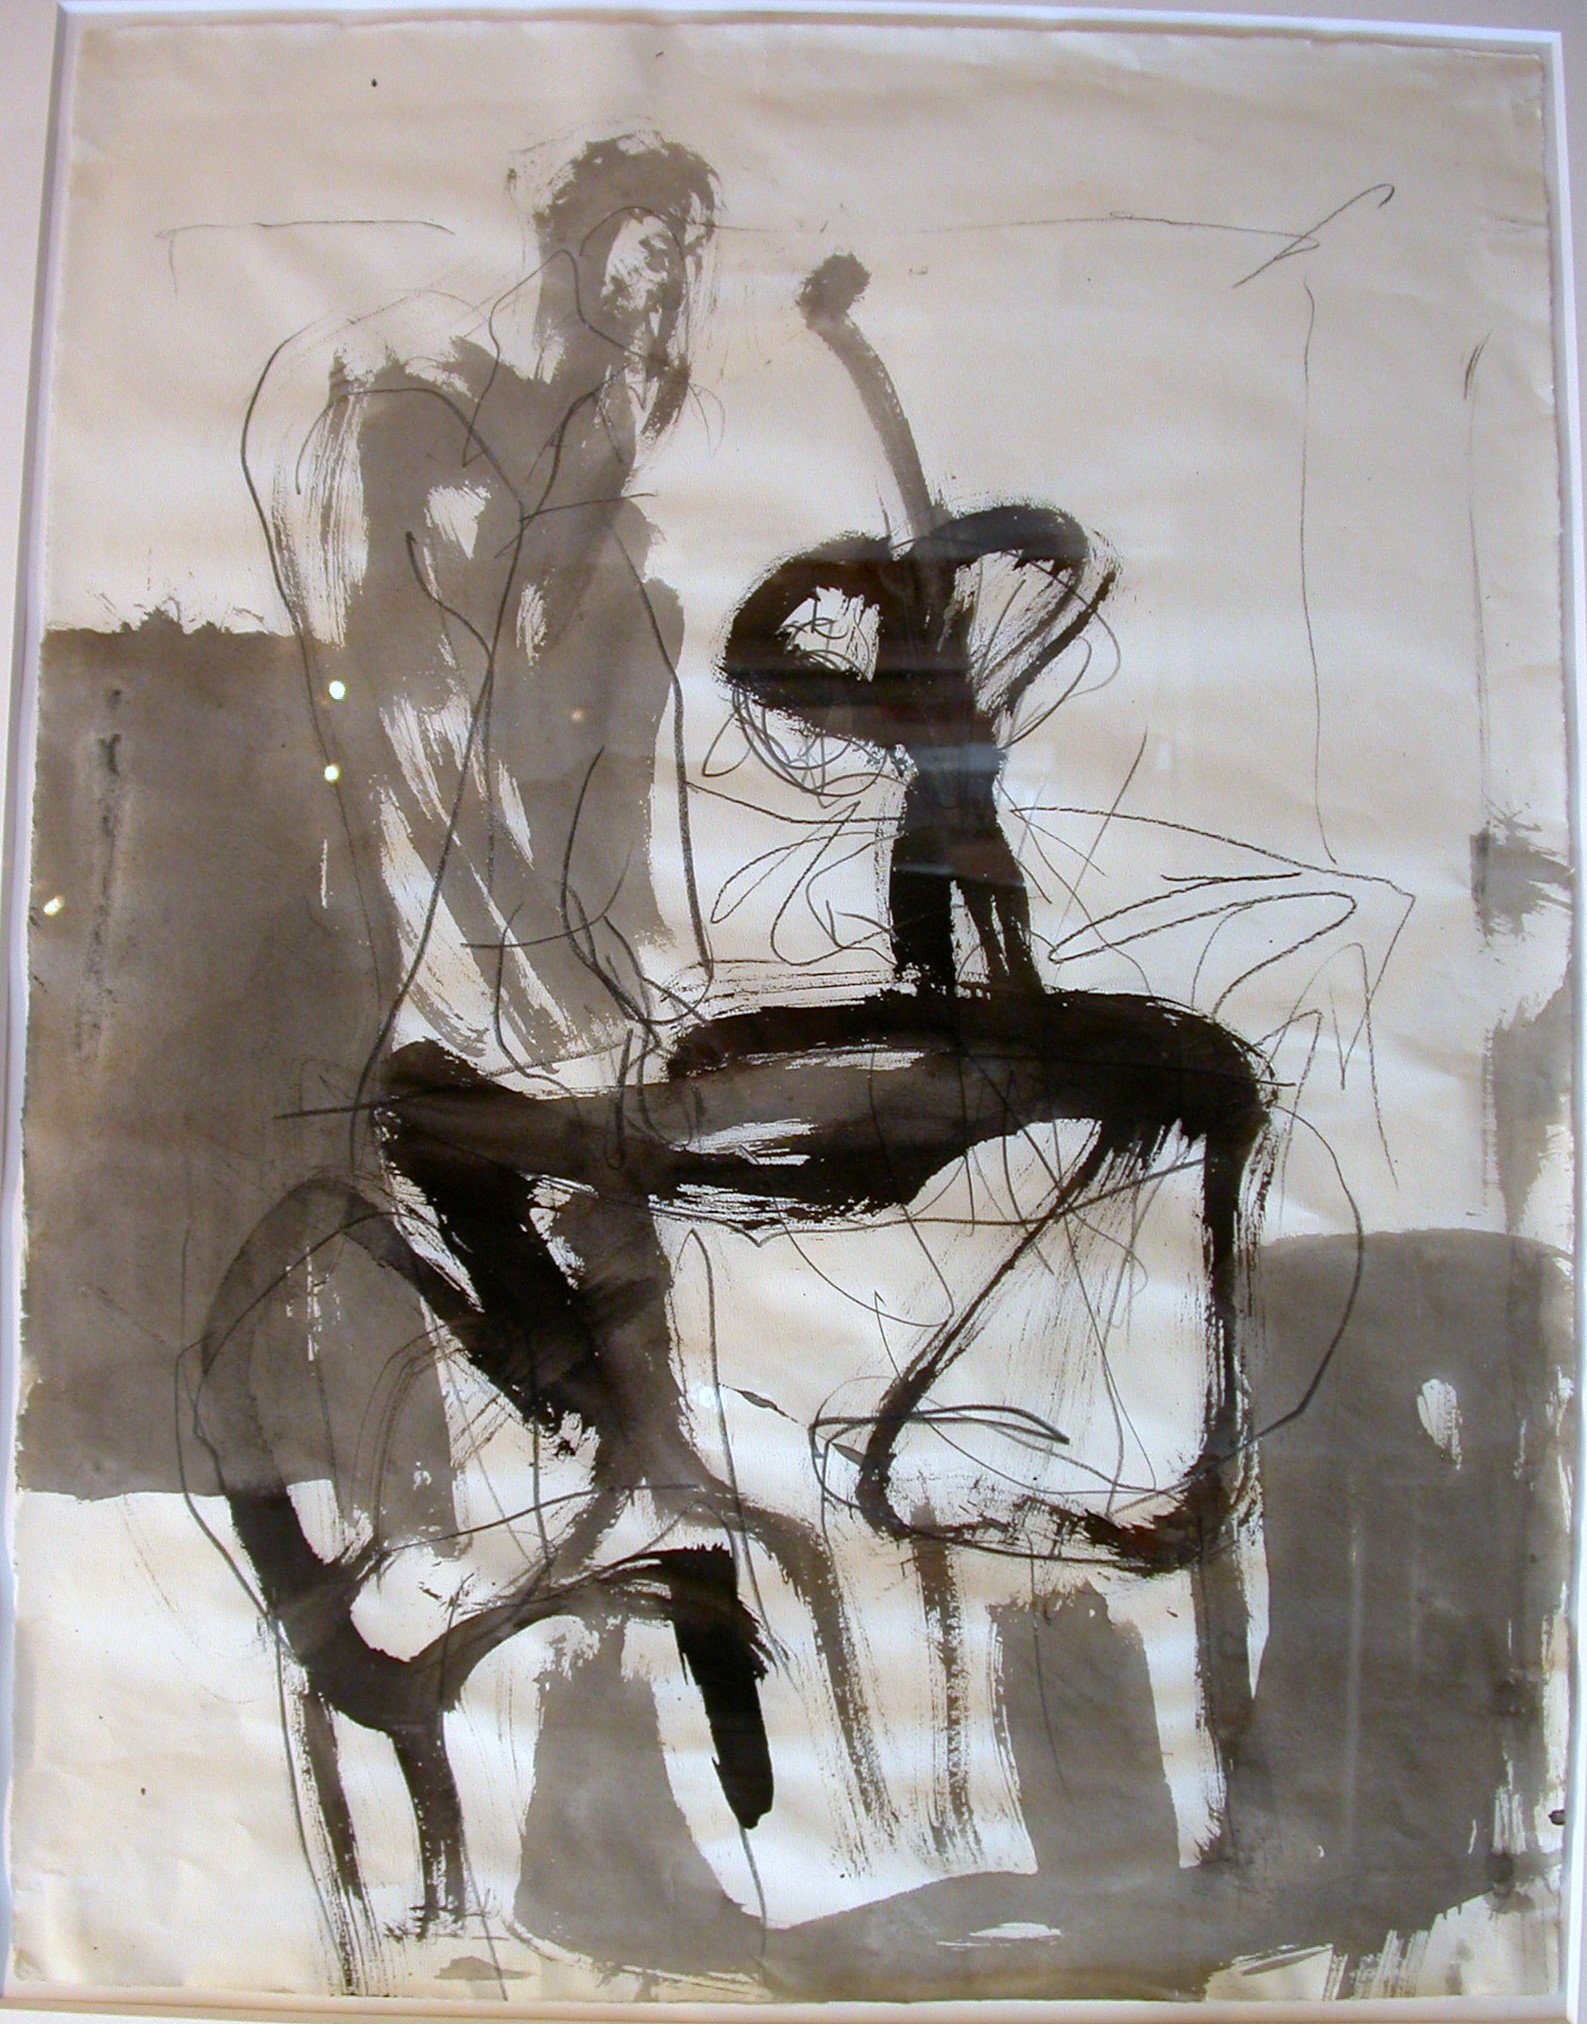 Anzinger "Figur,1985"